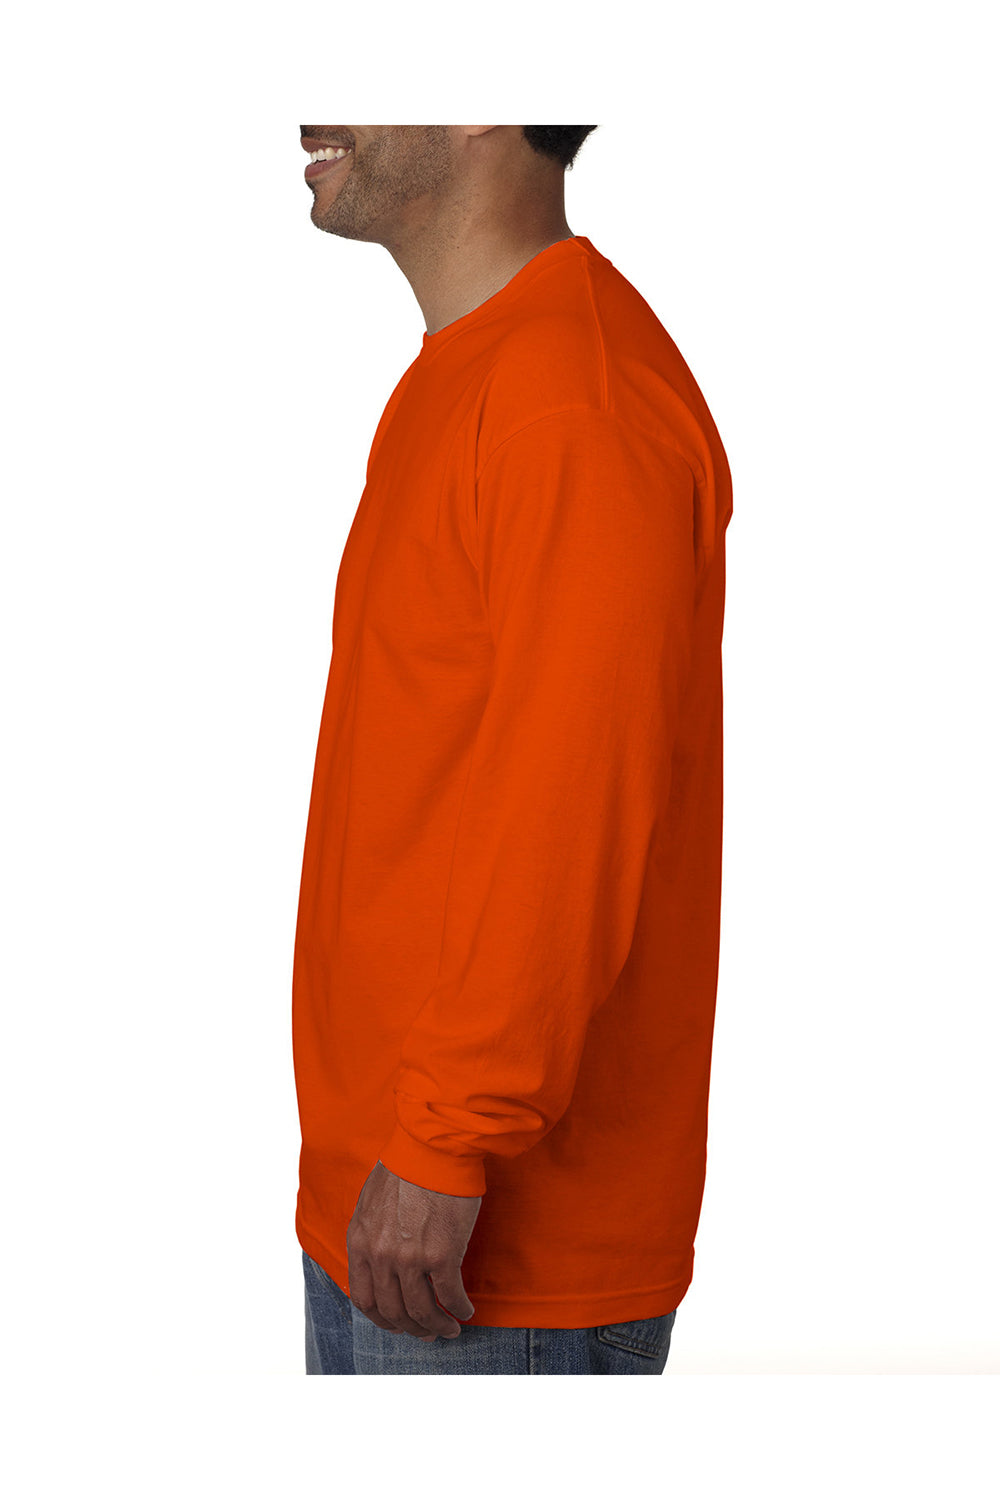 Bayside BA5060 Mens USA Made Long Sleeve Crewneck T-Shirt Bright Orange Model Side